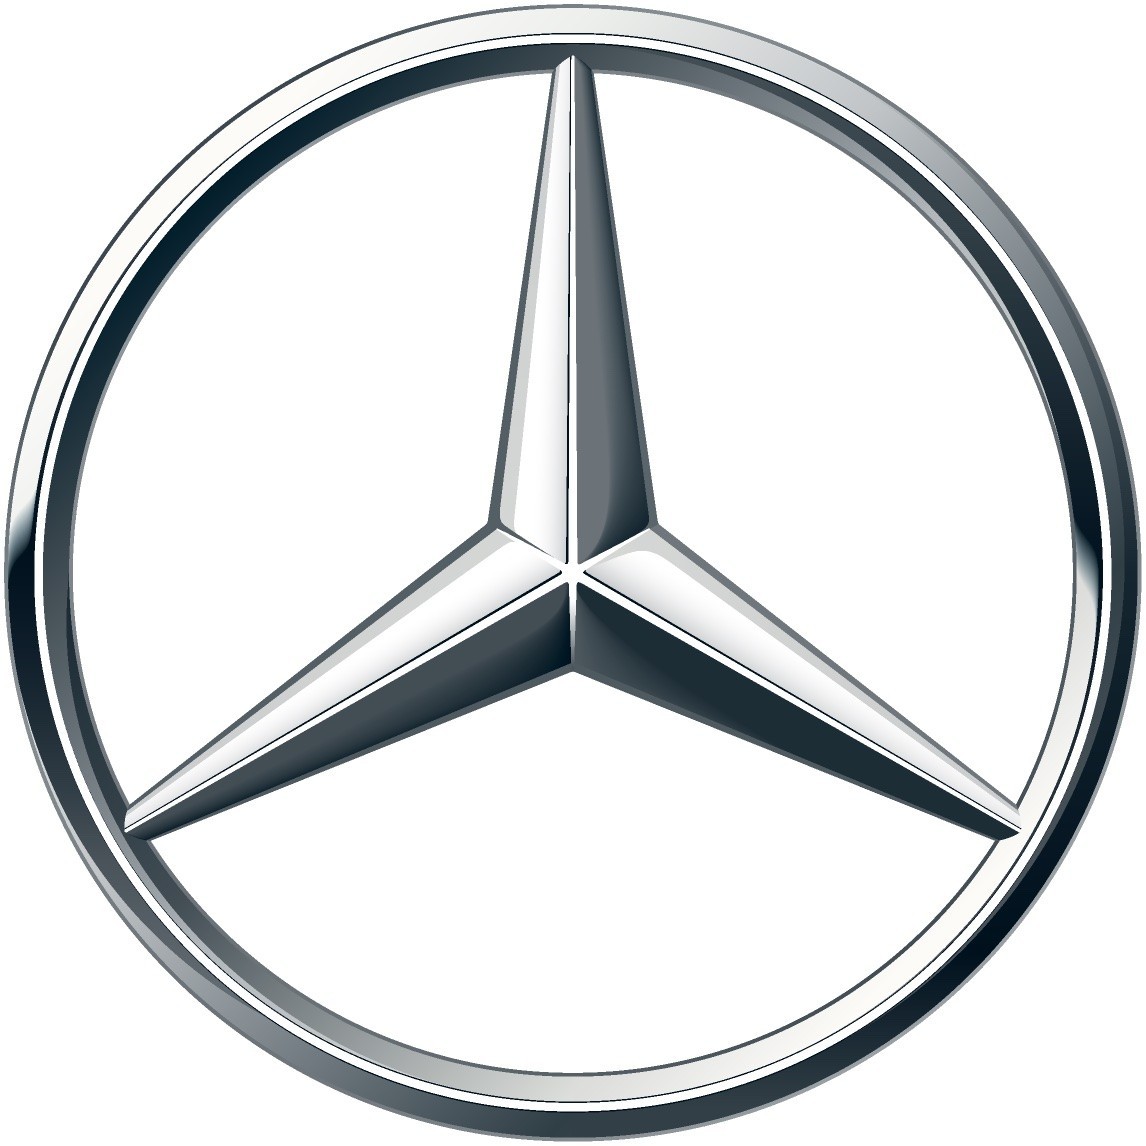 Mercedes-Benz Italia